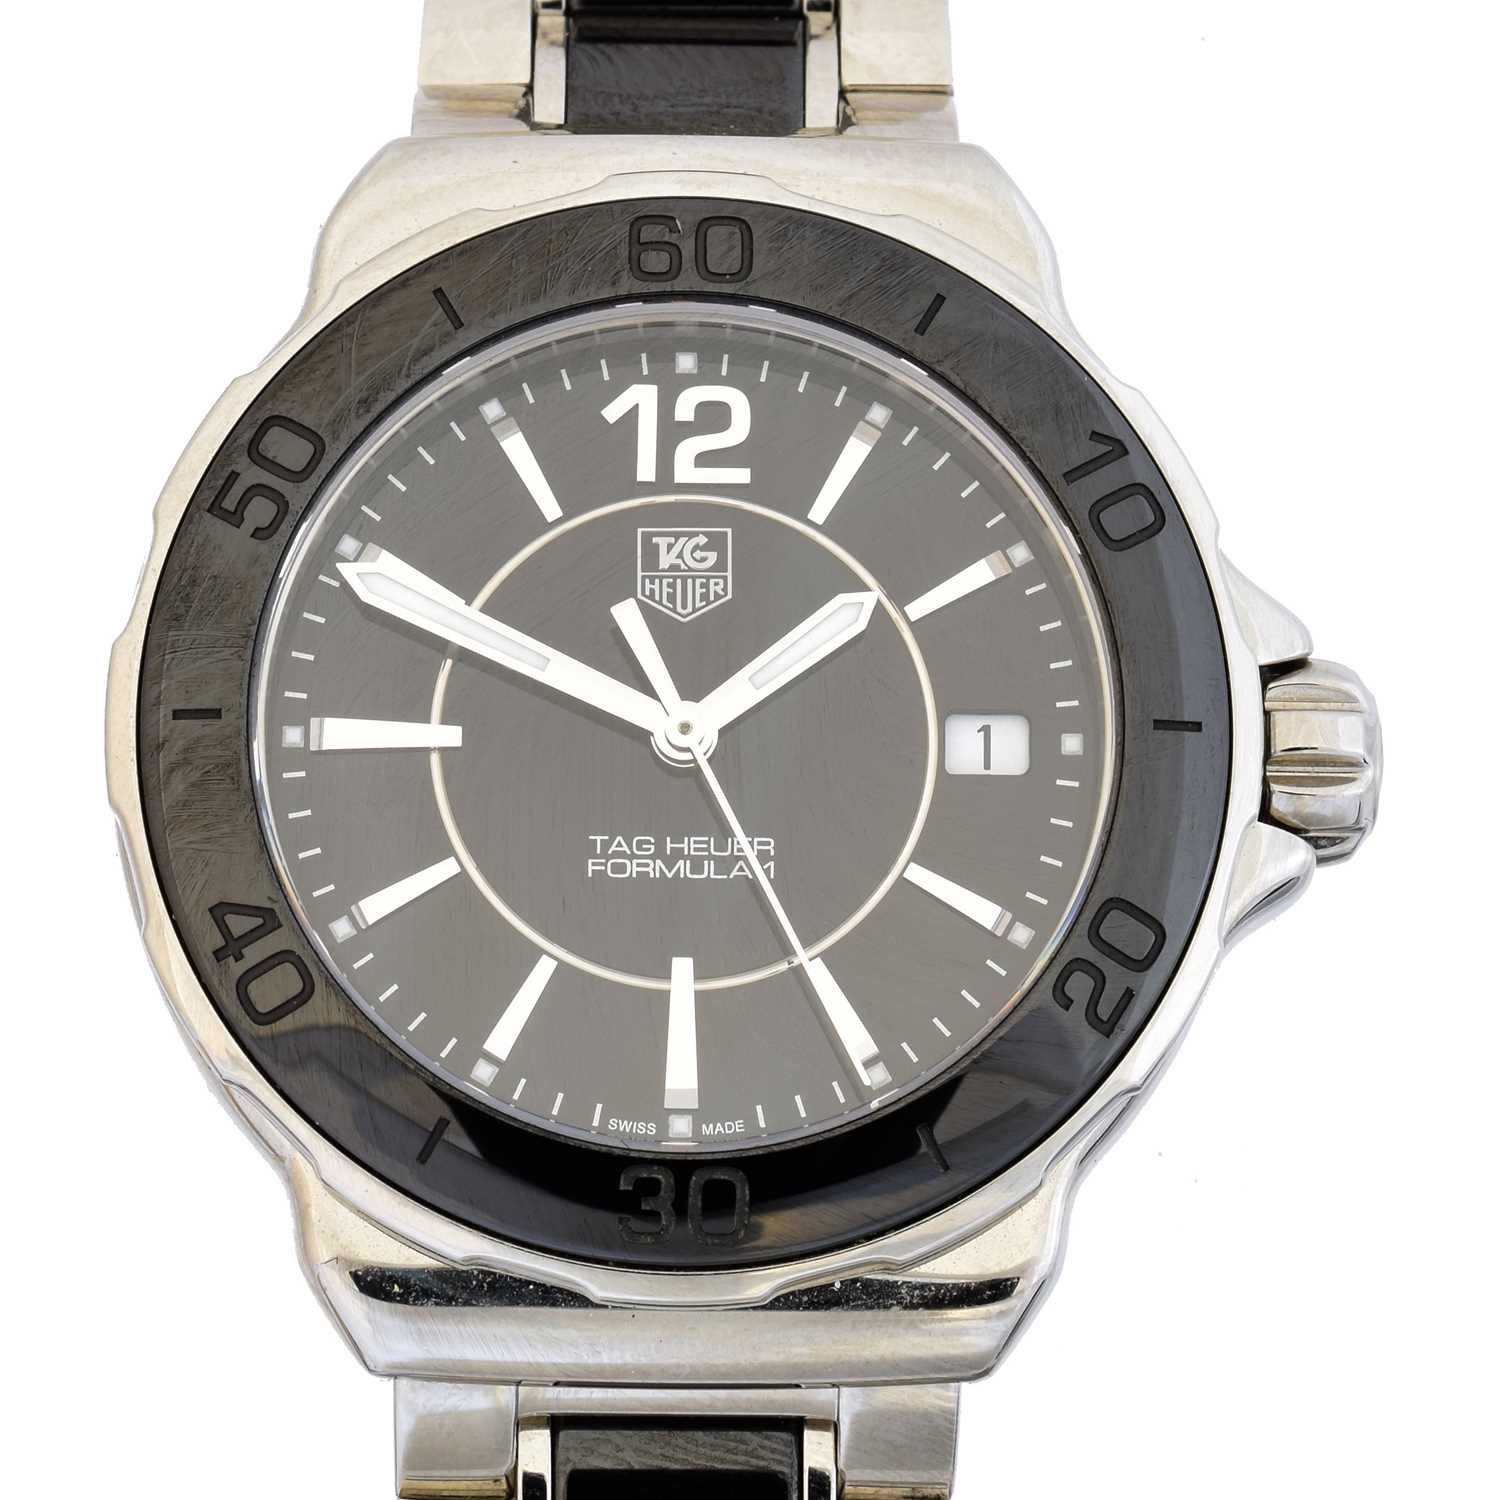 186 - A stainless steel TAG Heuer Formula 1 quartz wristwatch, 